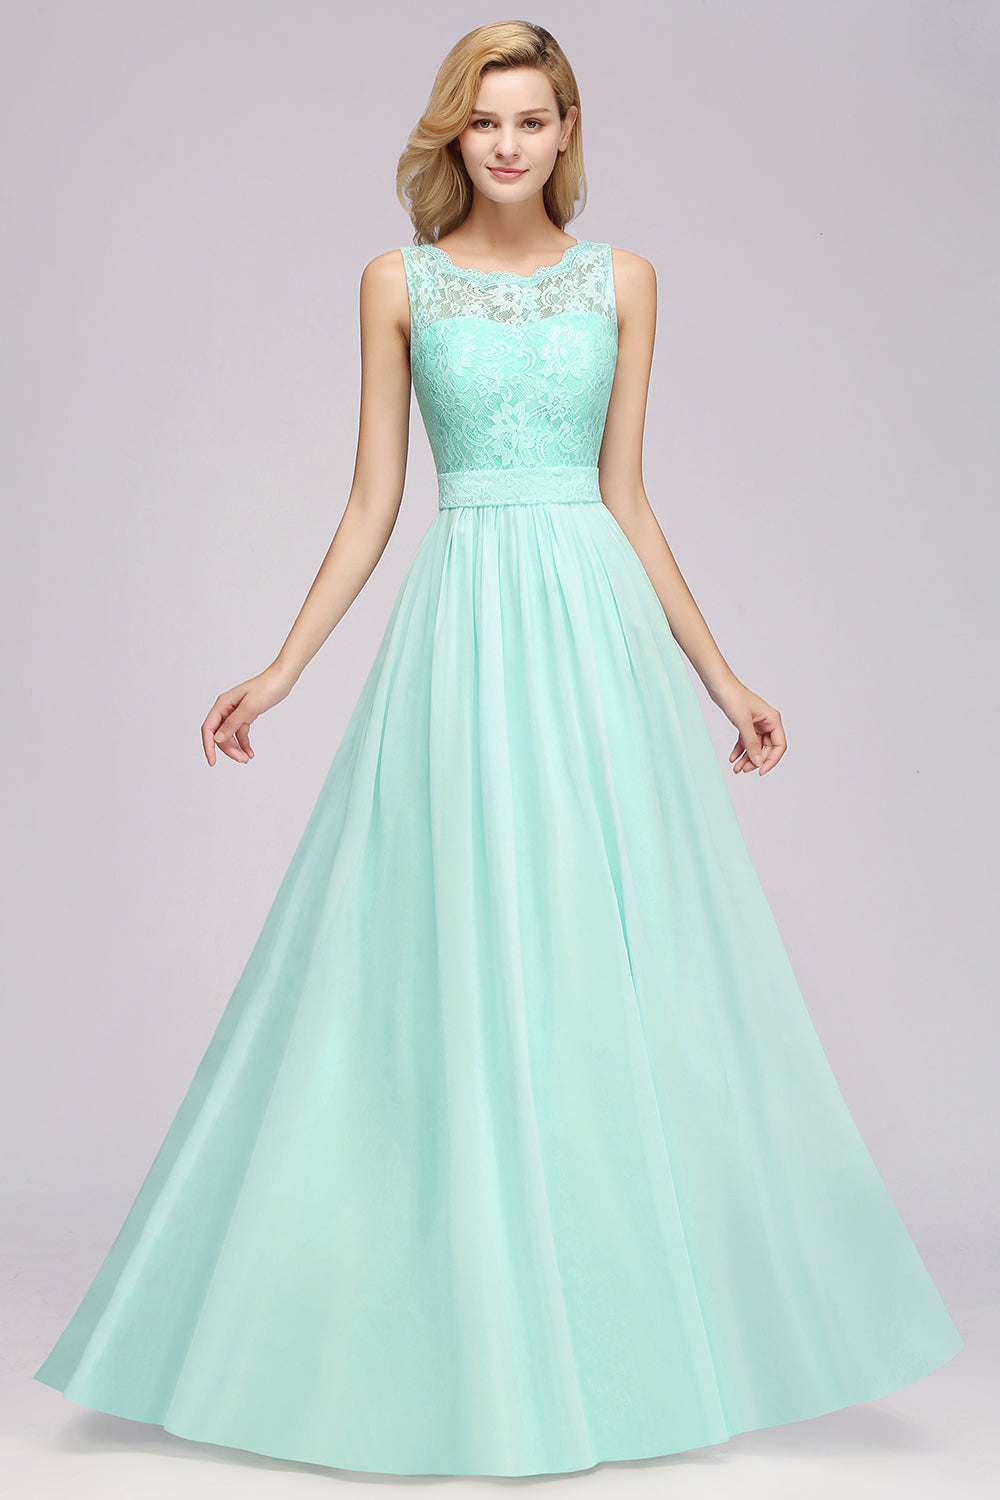 Elegant Chiffon Lace Scalloped Sleeveless Ruffle Bridesmaid Dresses-27dress